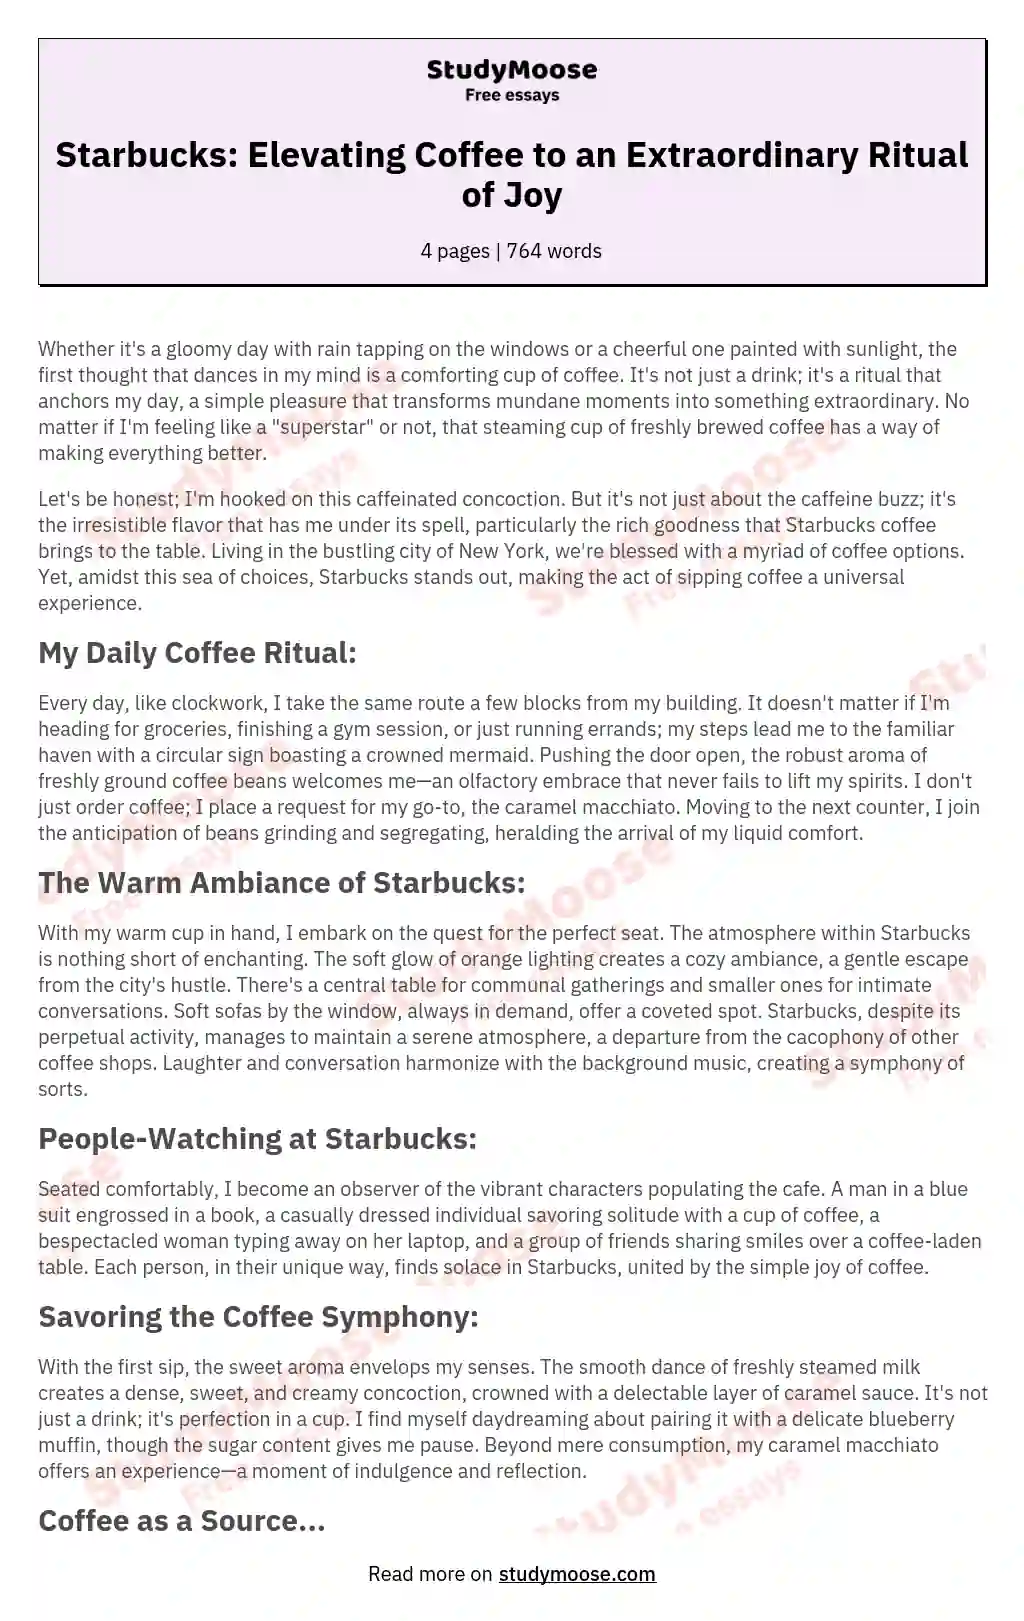 Starbucks: Elevating Coffee to an Extraordinary Ritual of Joy essay